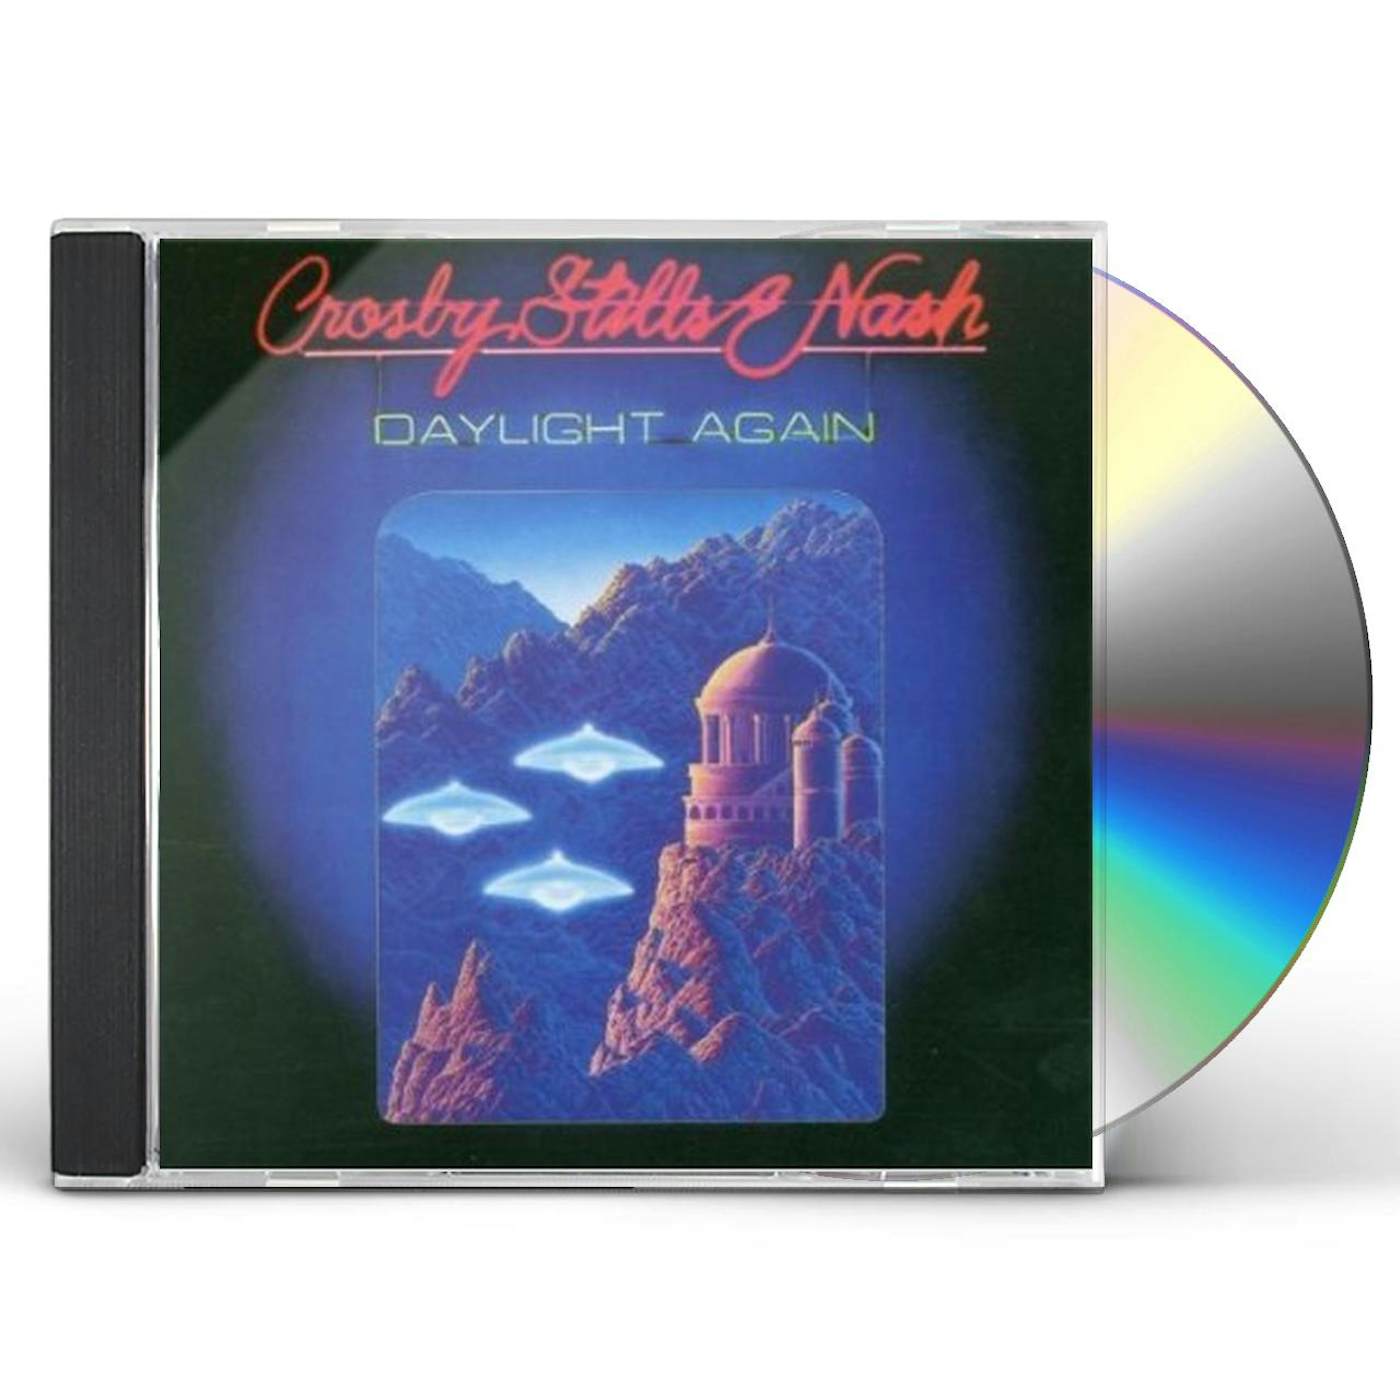 Crosby, Stills & Nash DAYLIGHT AGAIN CD